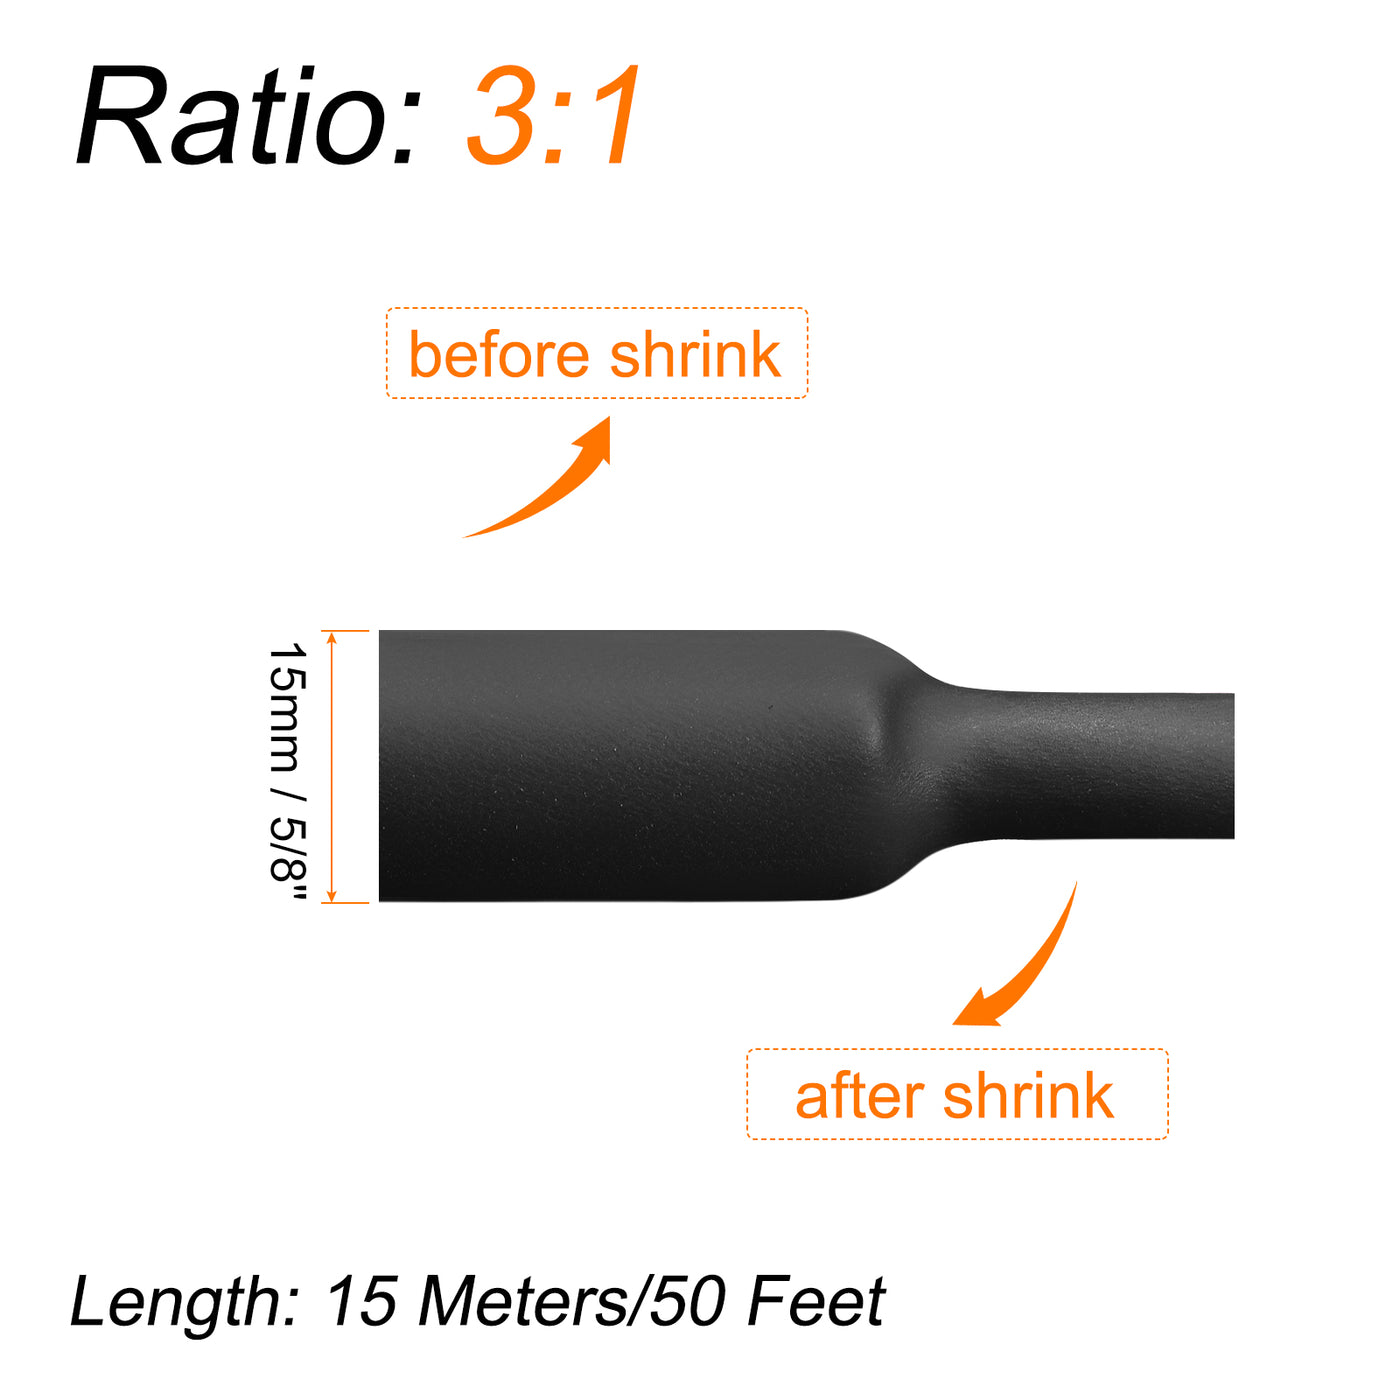 Harfington Heat Shrink Tubing, 3:1 Ratio 5/8 Inch Dia 50ft Adhesive Lined Dual Wall Black